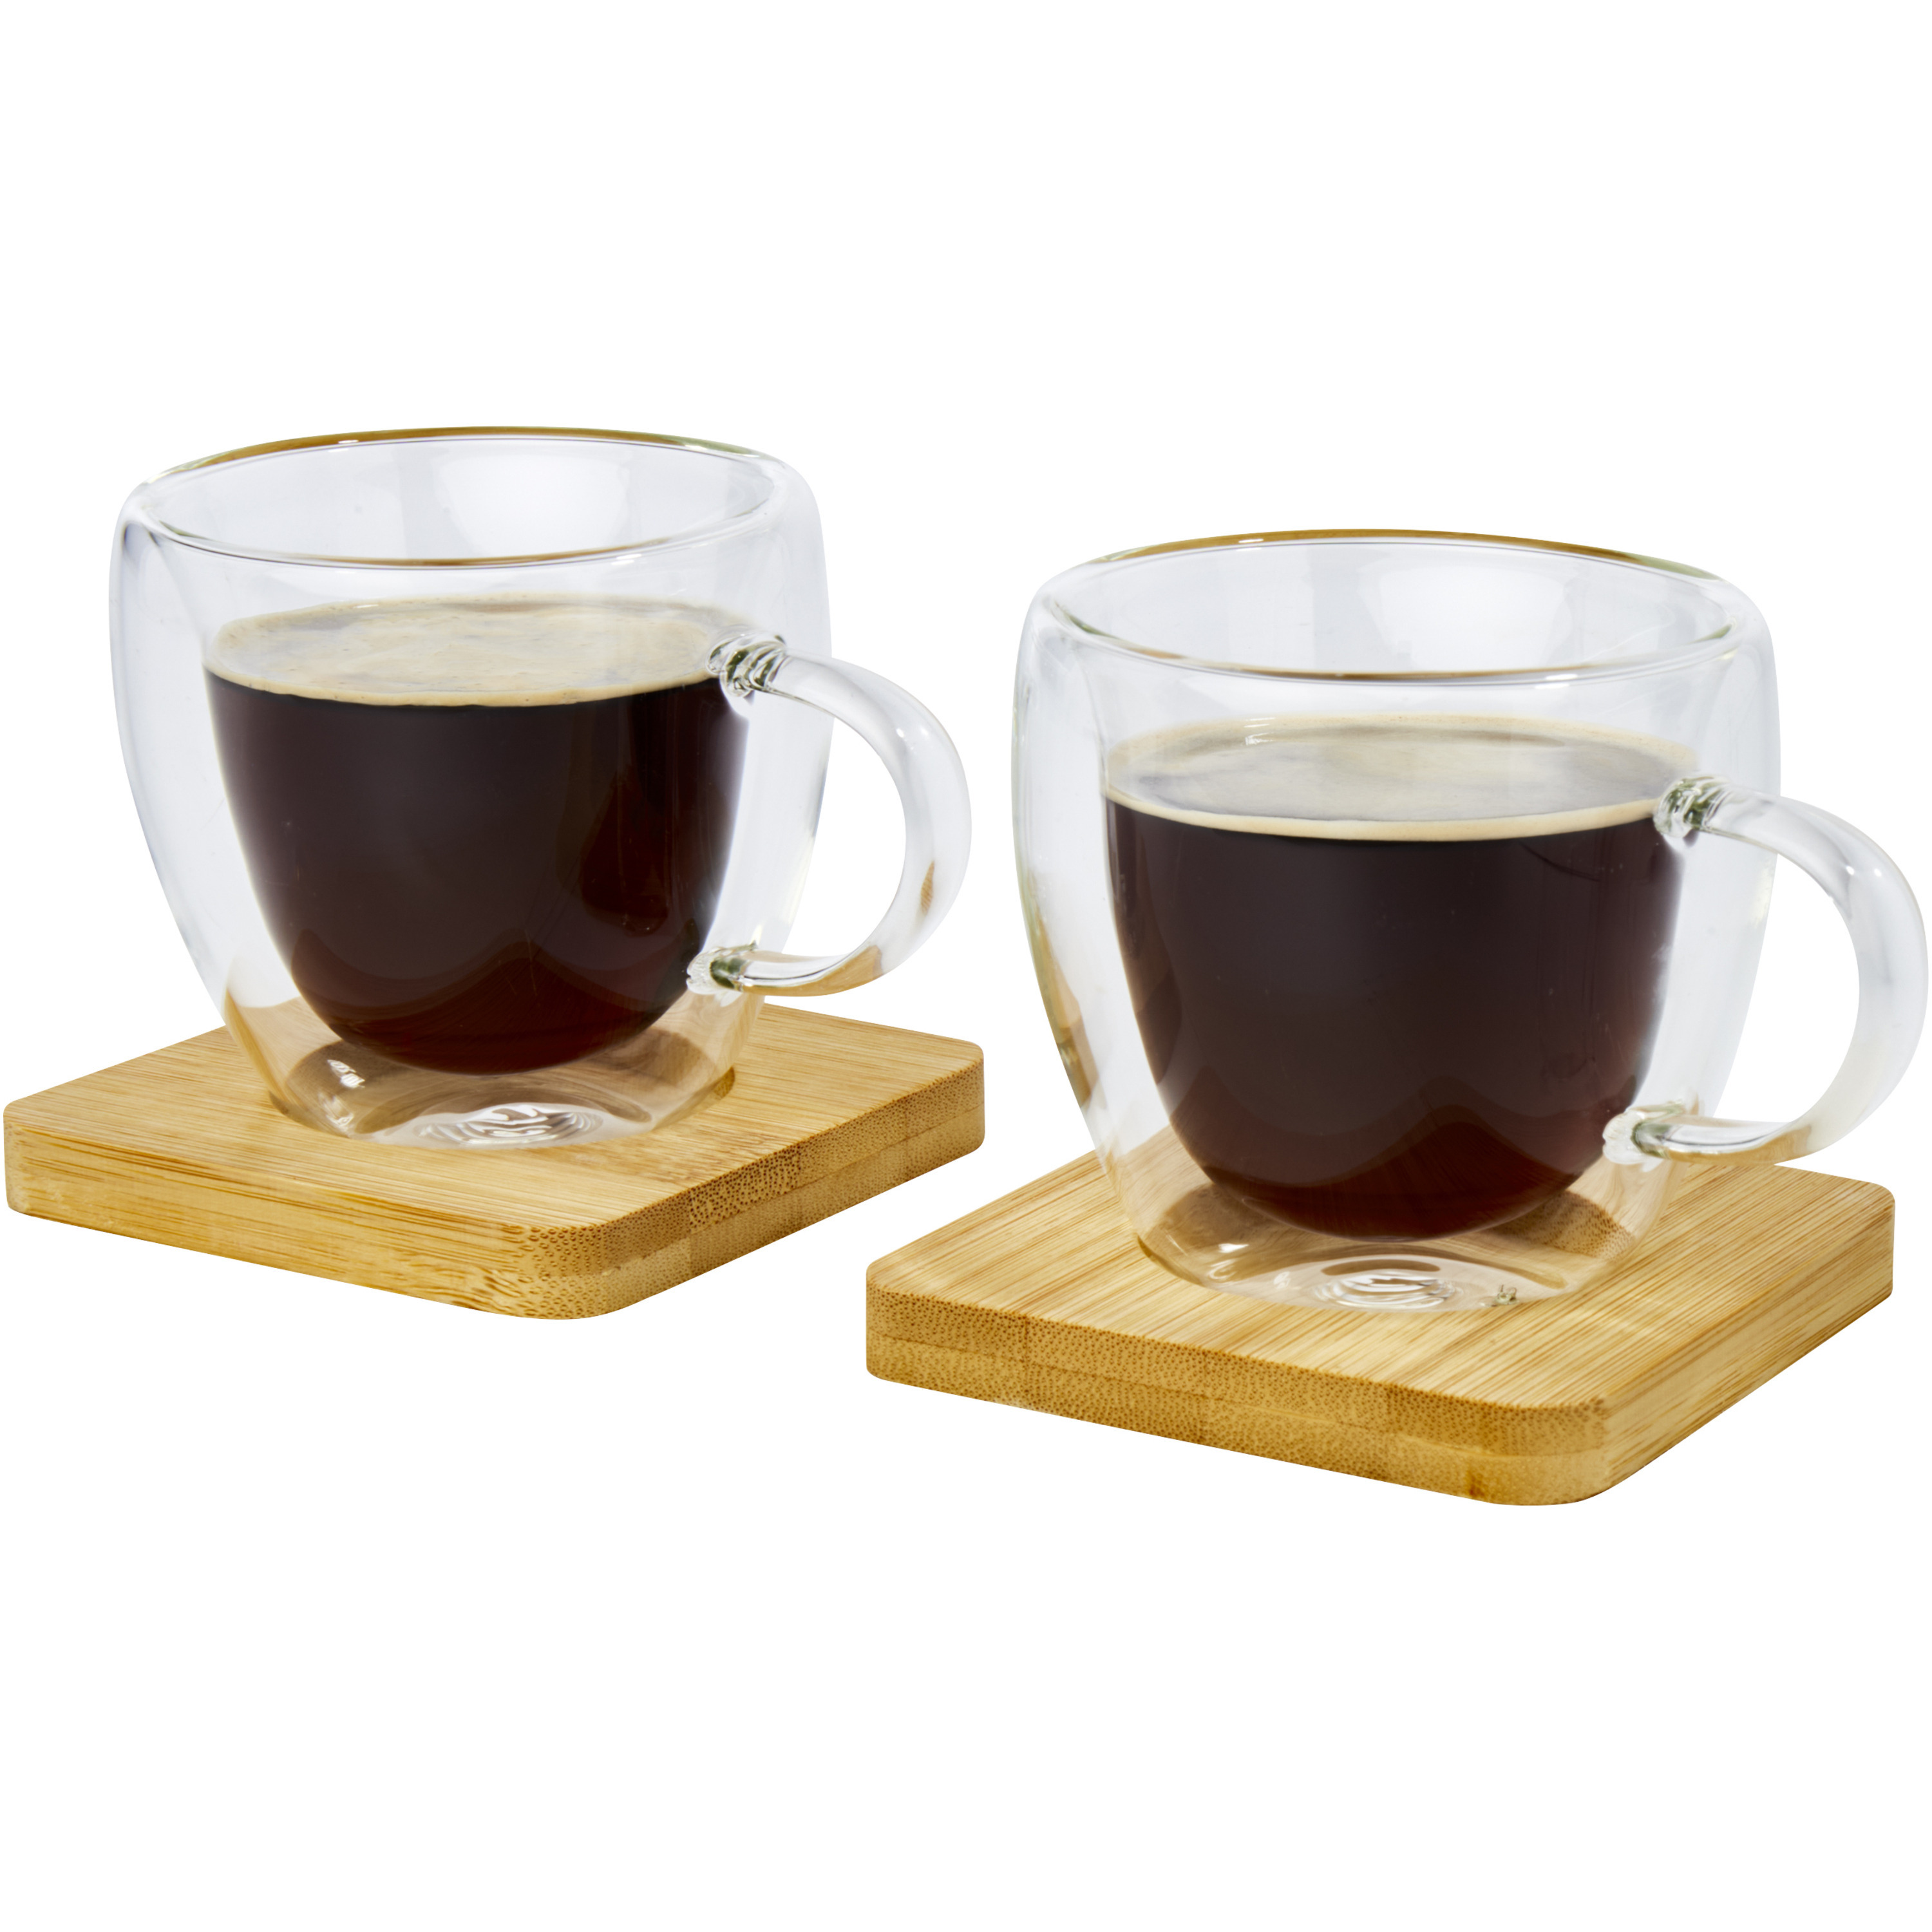 Seasons dubbelwandige koffieglazen 100 ml set van 2x stuks met bamboe onderzetters